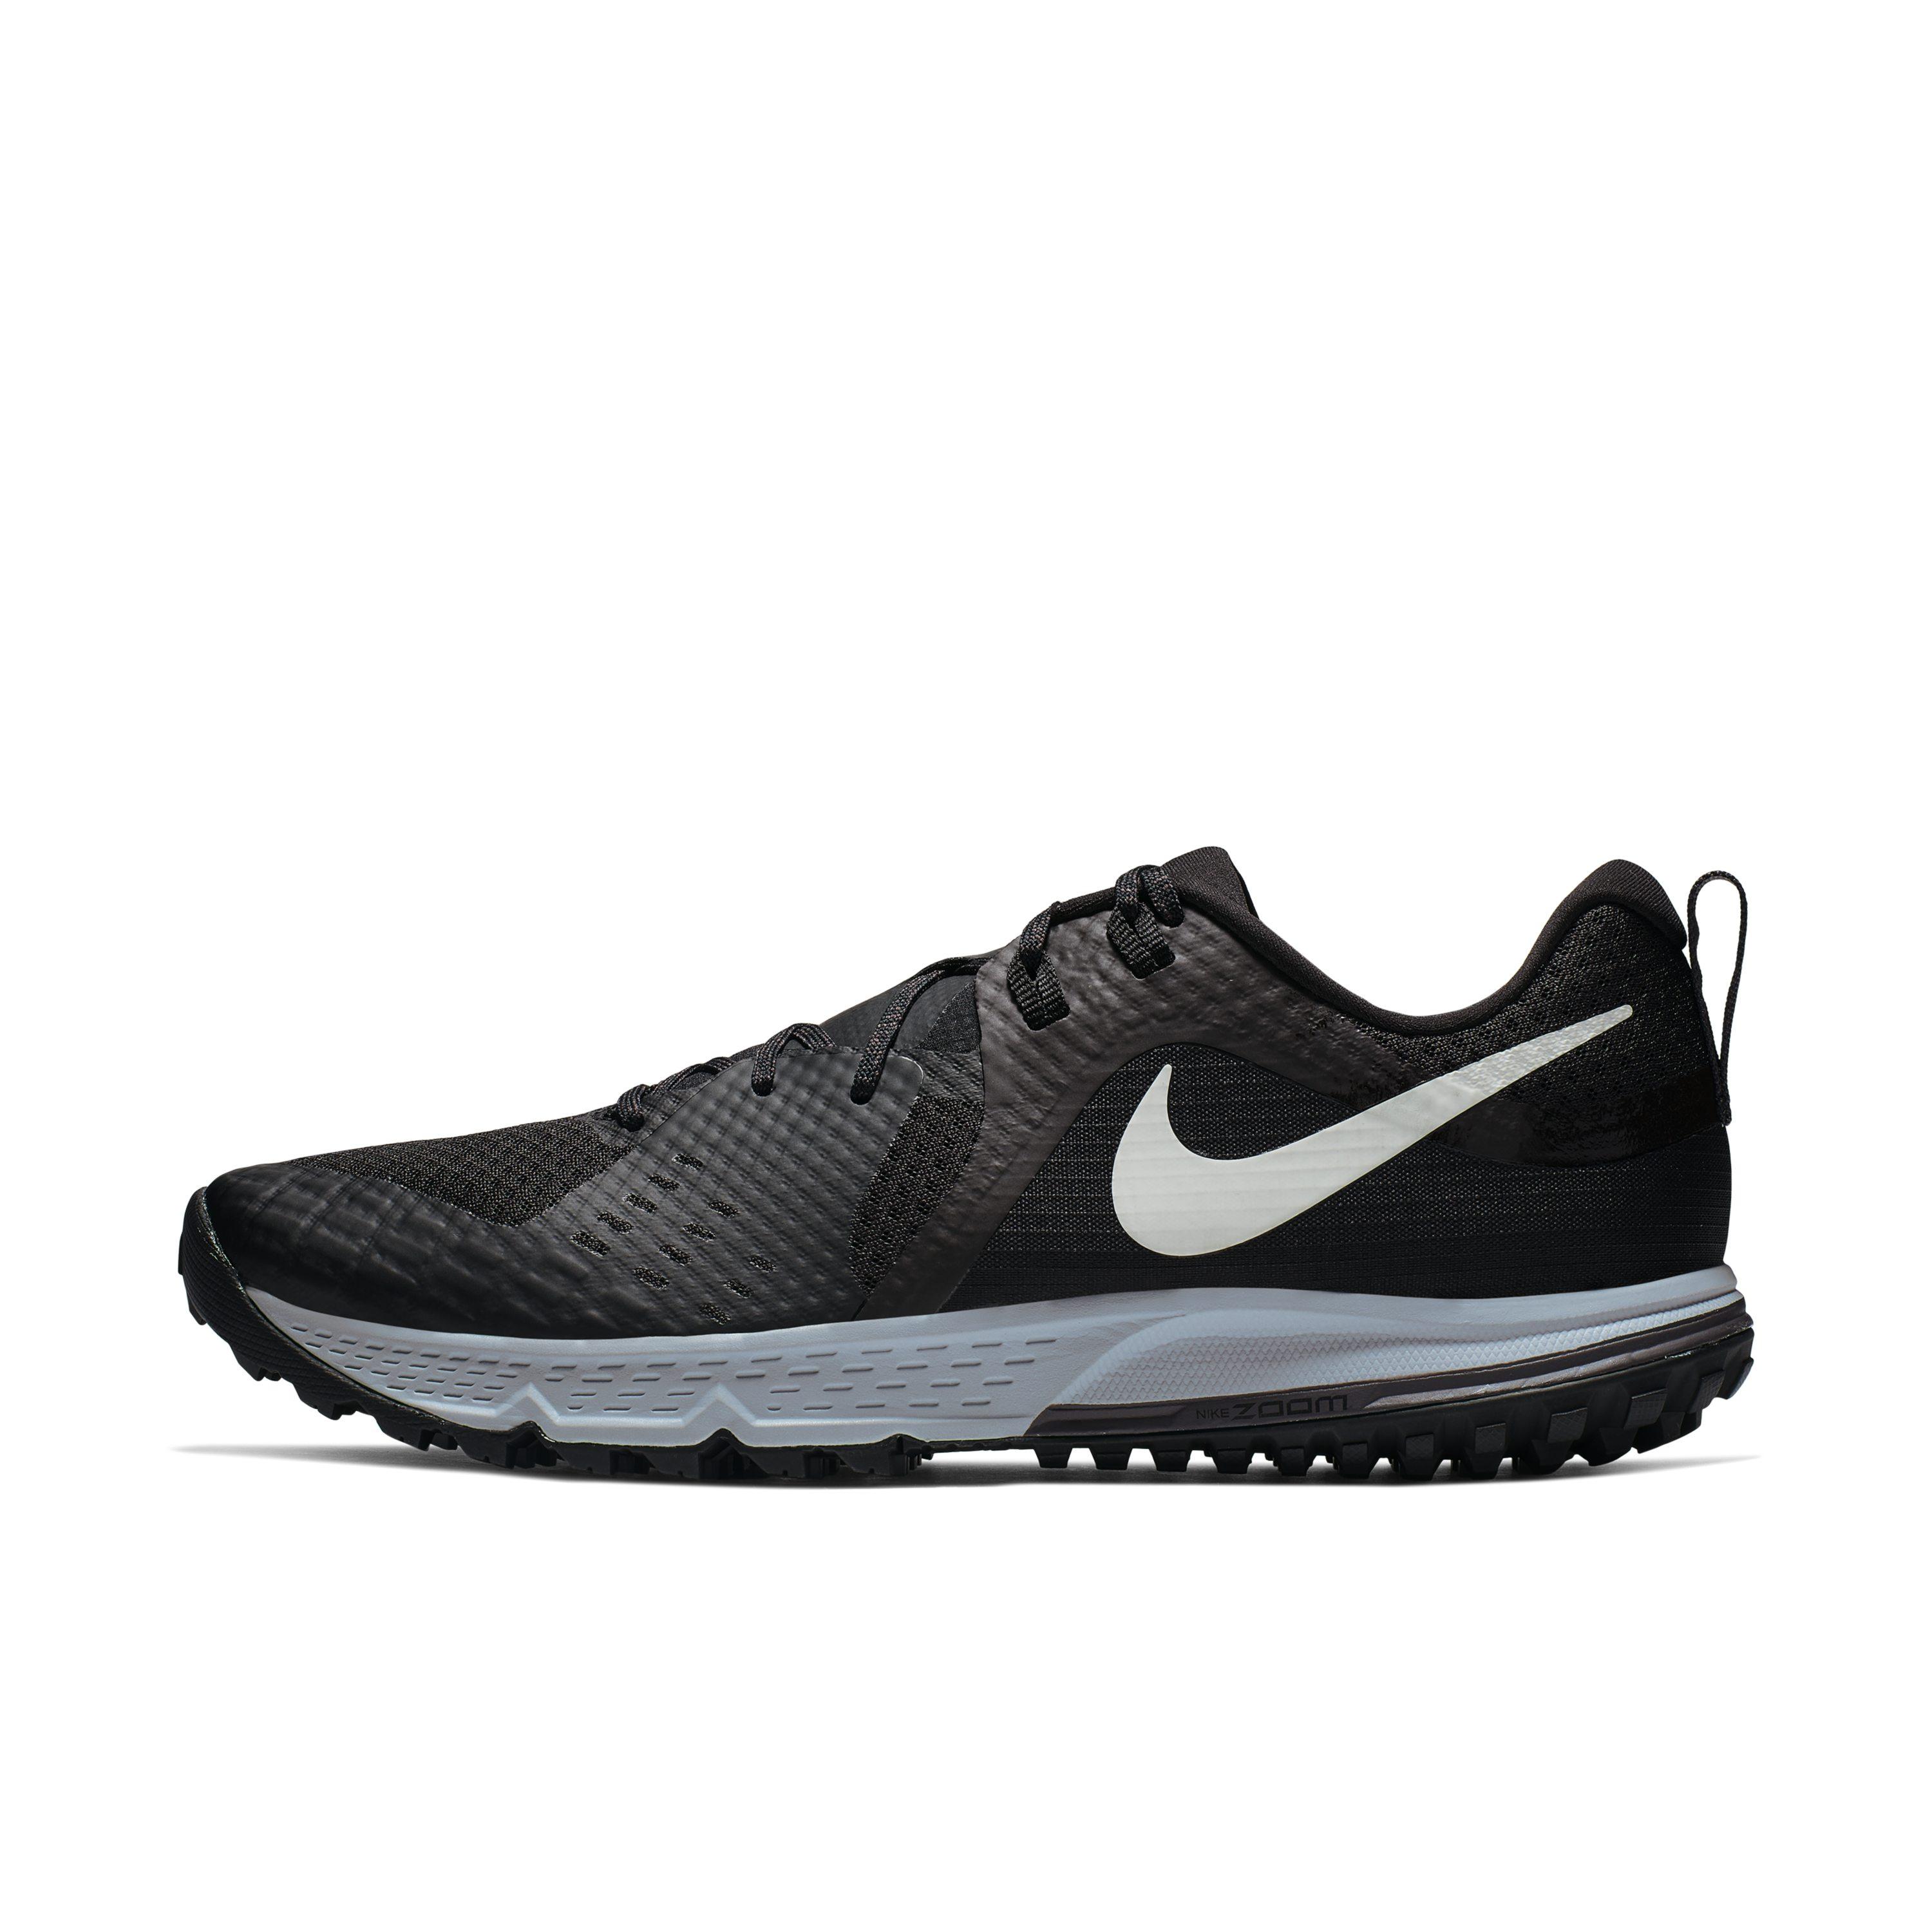 Nike Air Zoom Wildhorse 5 Running Shoe in Black for Men - Lyst